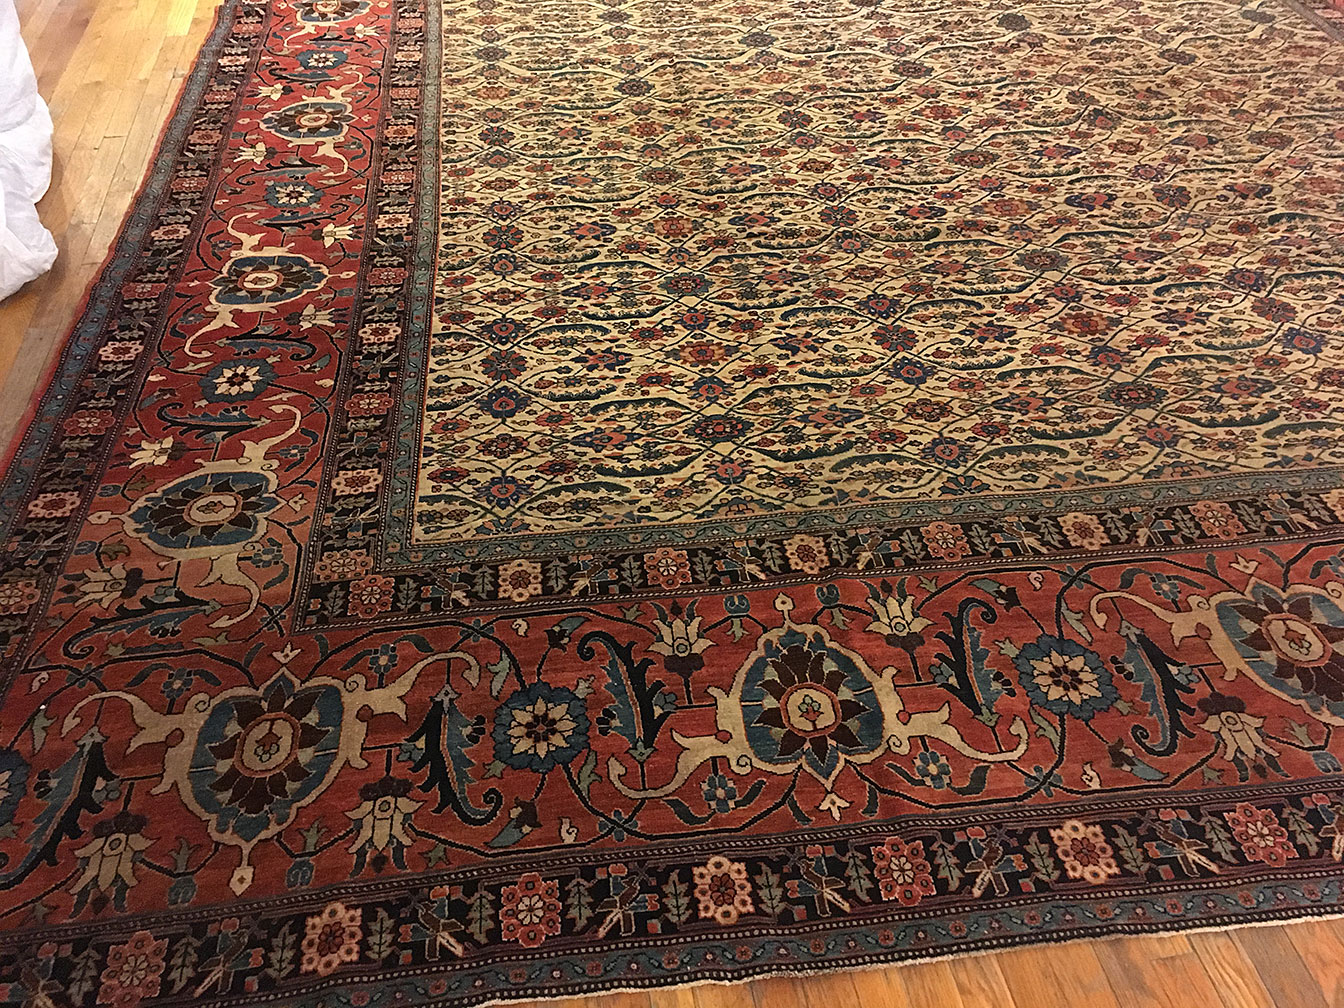 Antique tabriz Carpet - # 51580